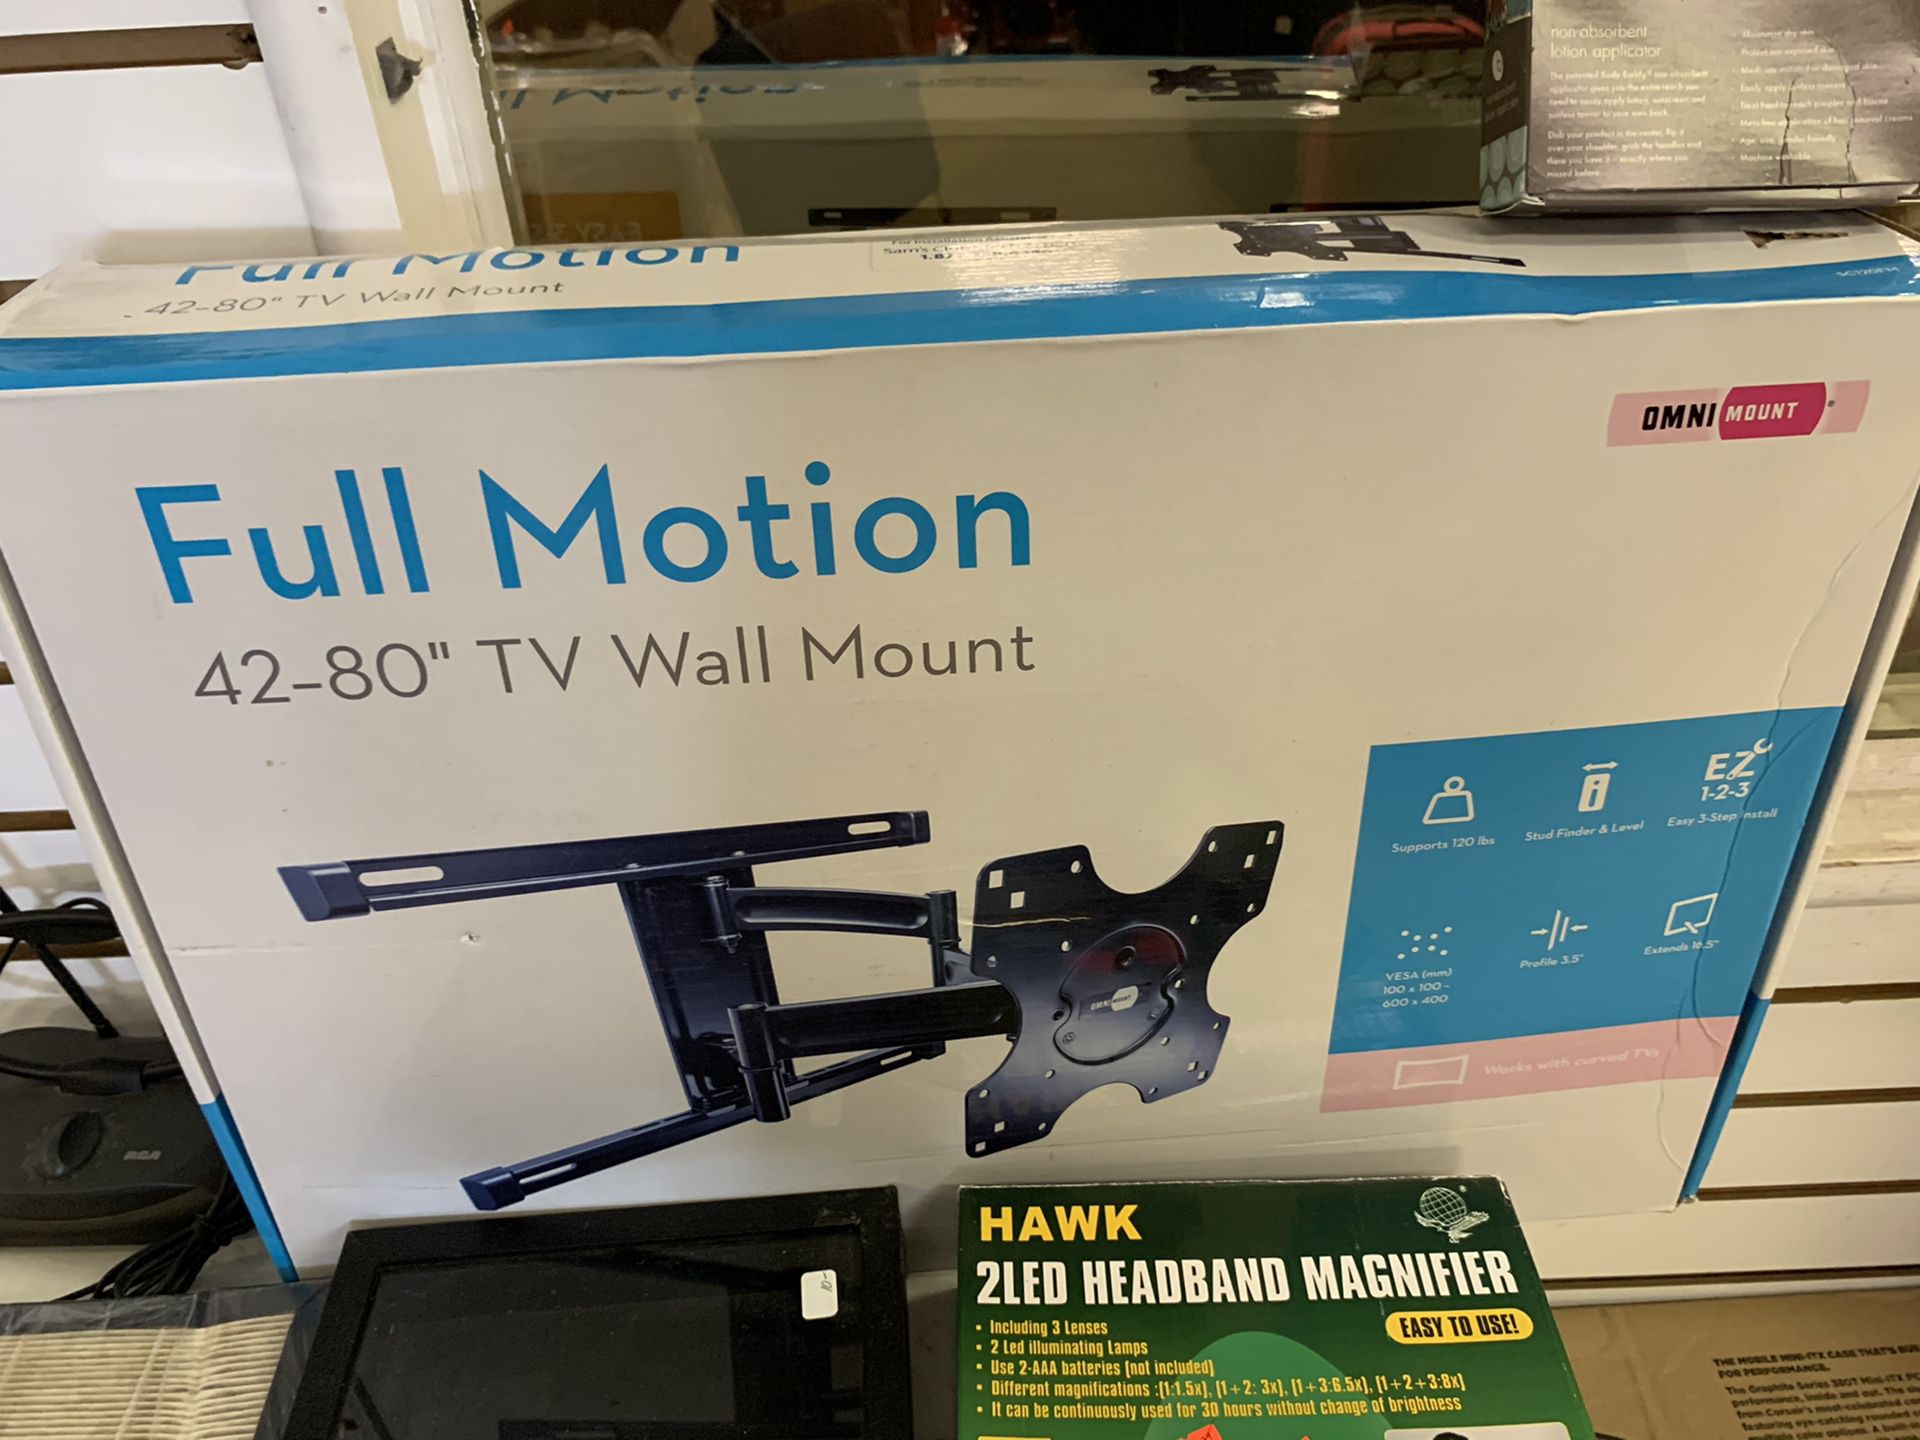 Tv wall mount full motion 42- 80”